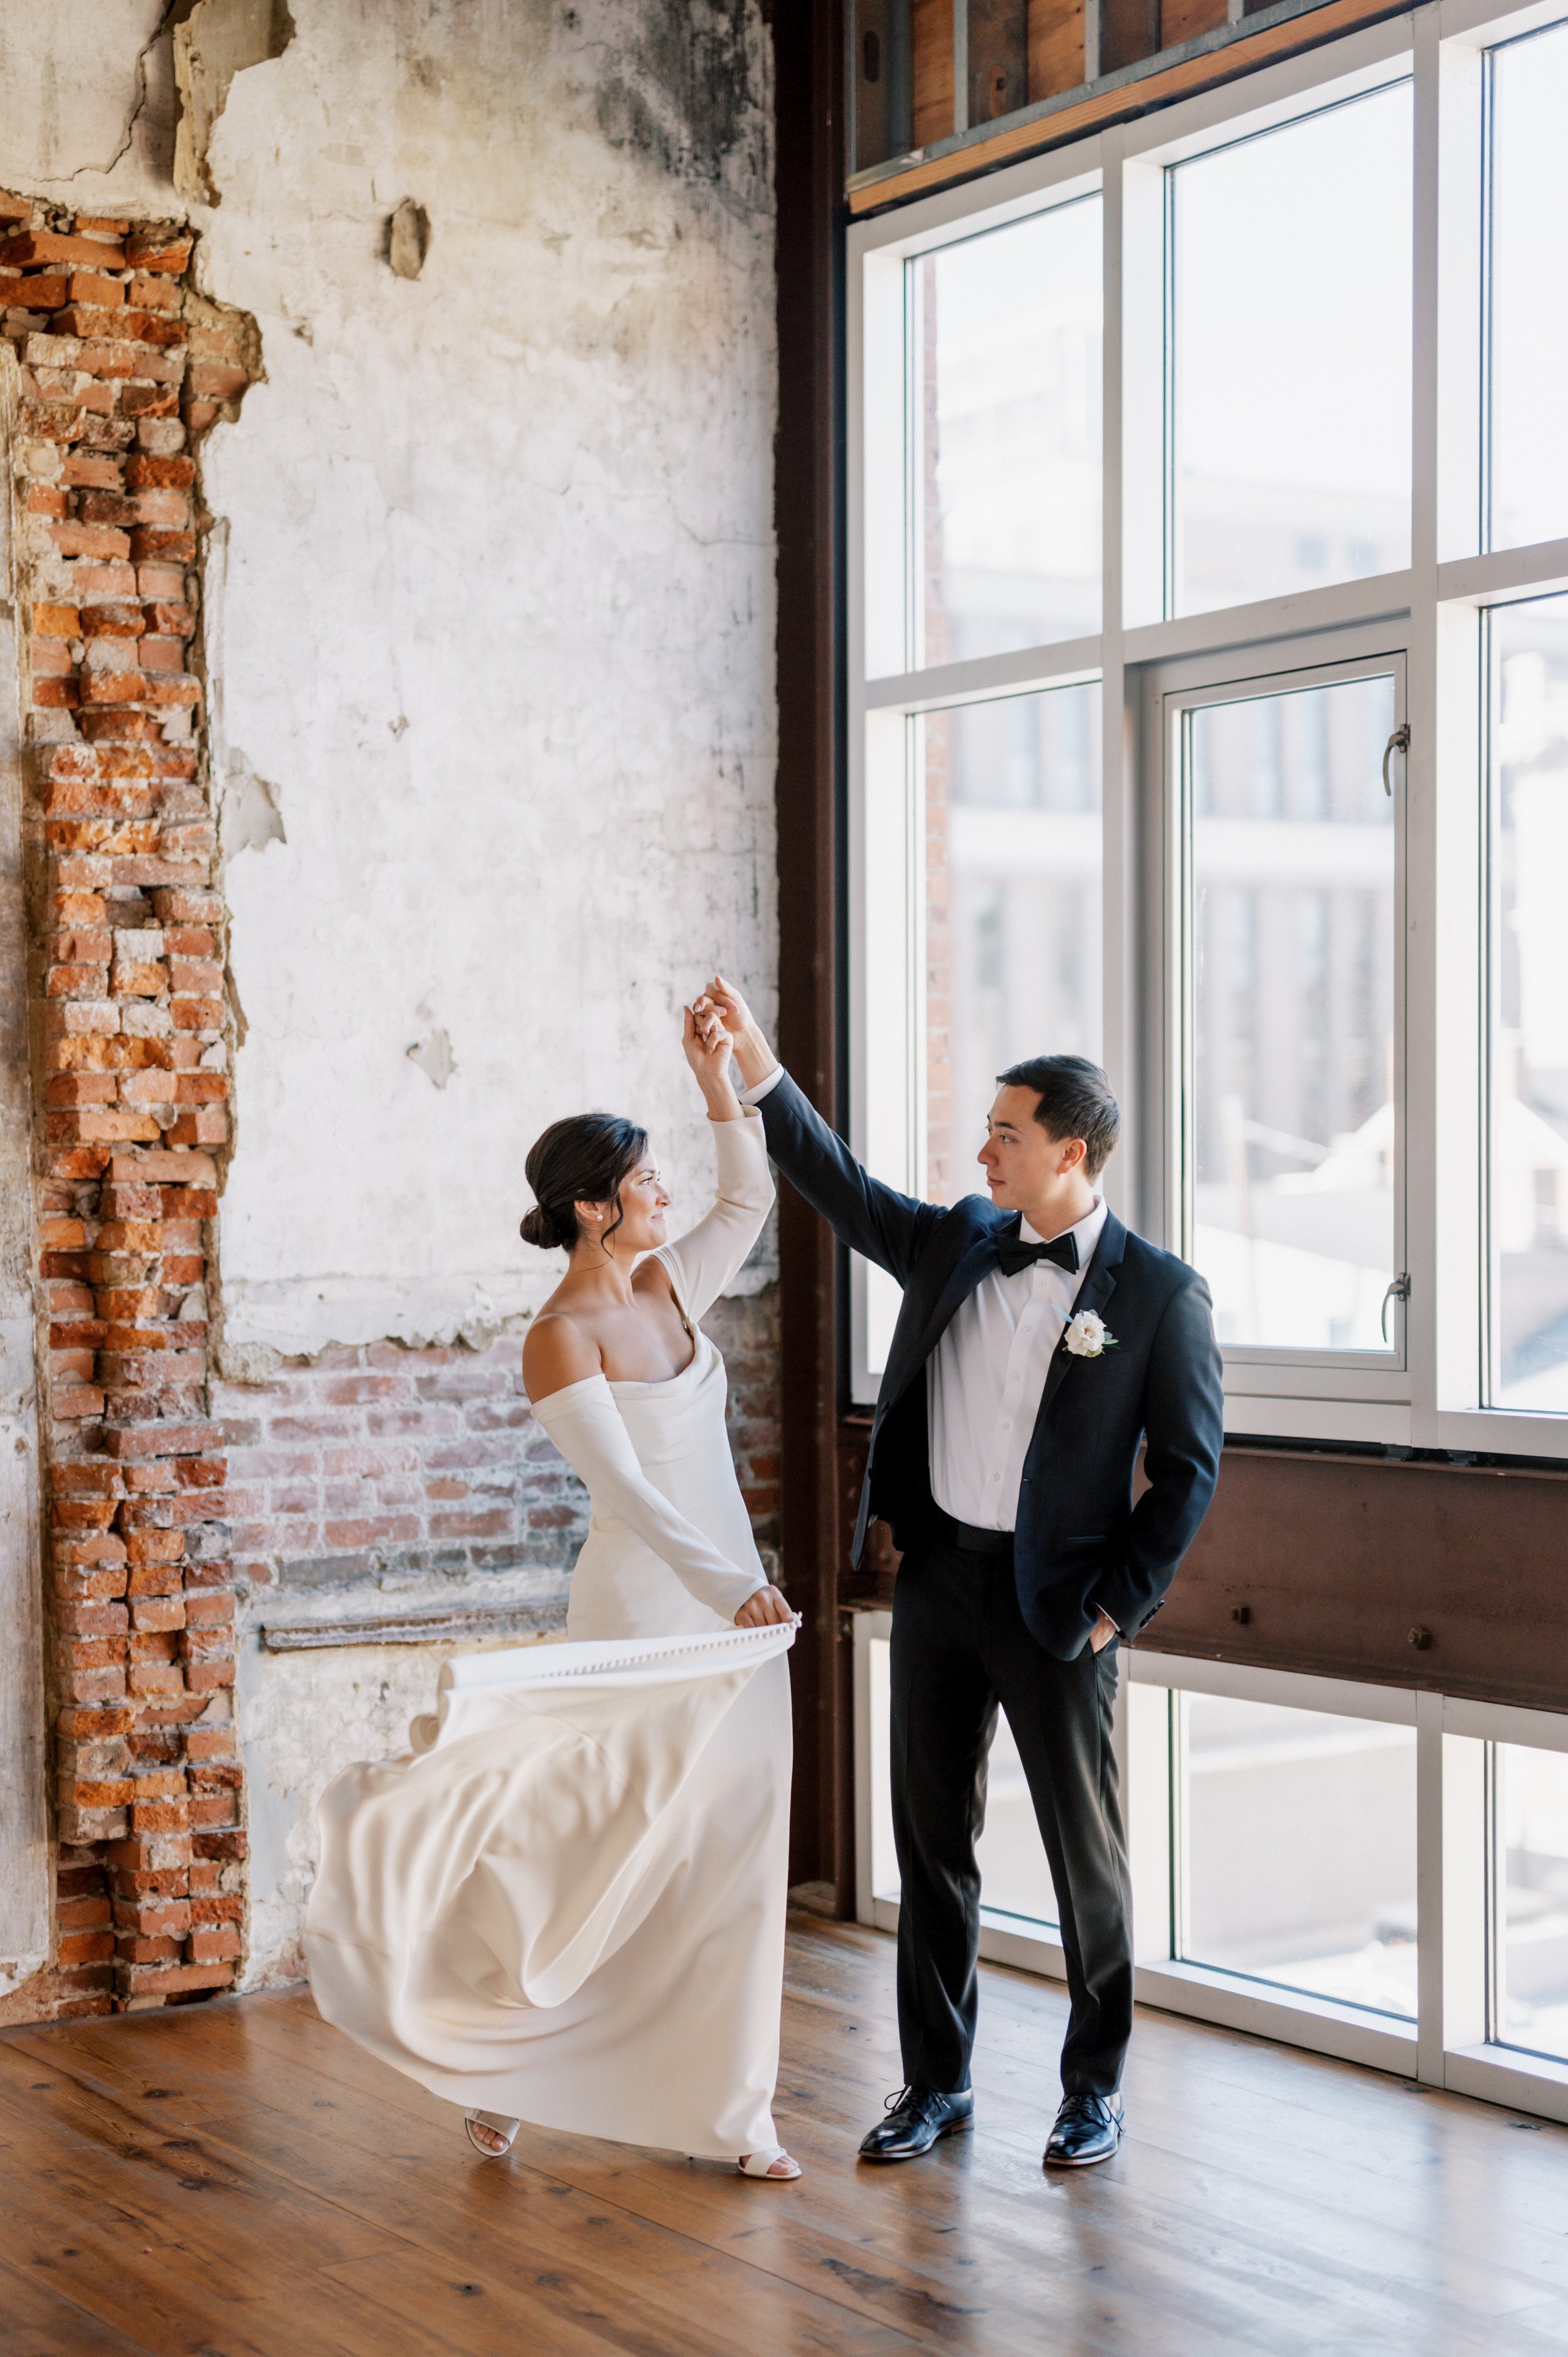 Bride groom dancing in rustic eclectic space large windows